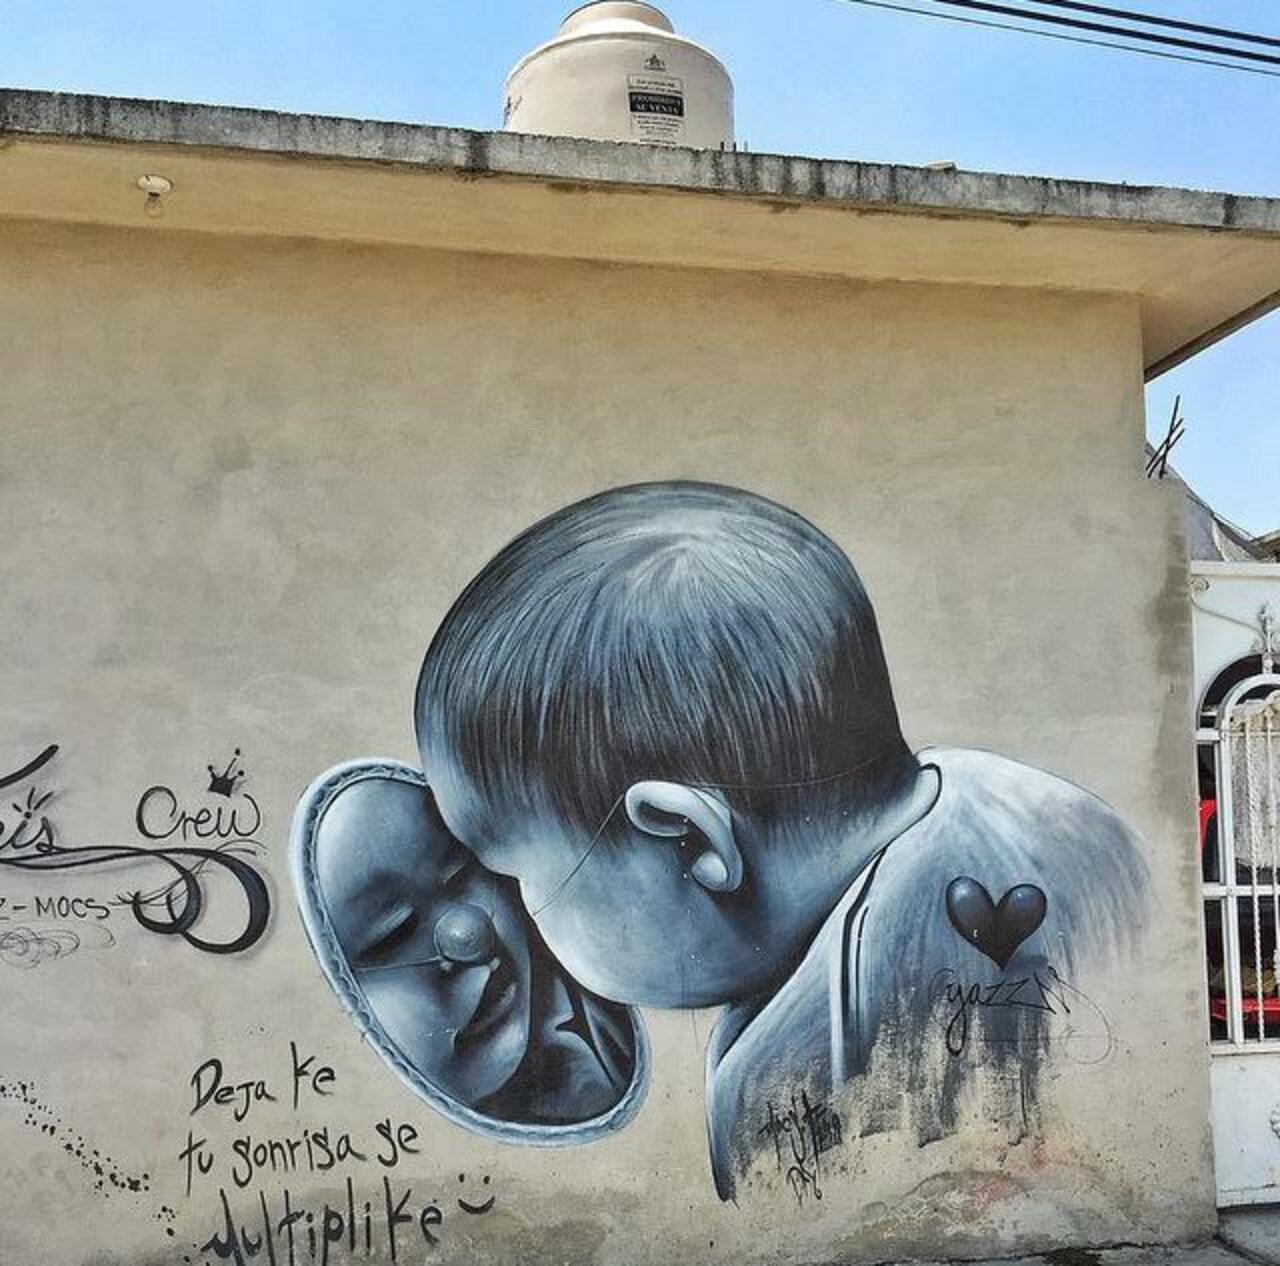 http://tsushopper.blogspot.ca/ RT GoogleStreetArt: Street Art by DF6 Crew in Morelos, Mexico

#art #arte #graffiti #streetart http://t.co/enEEQUo2Mc